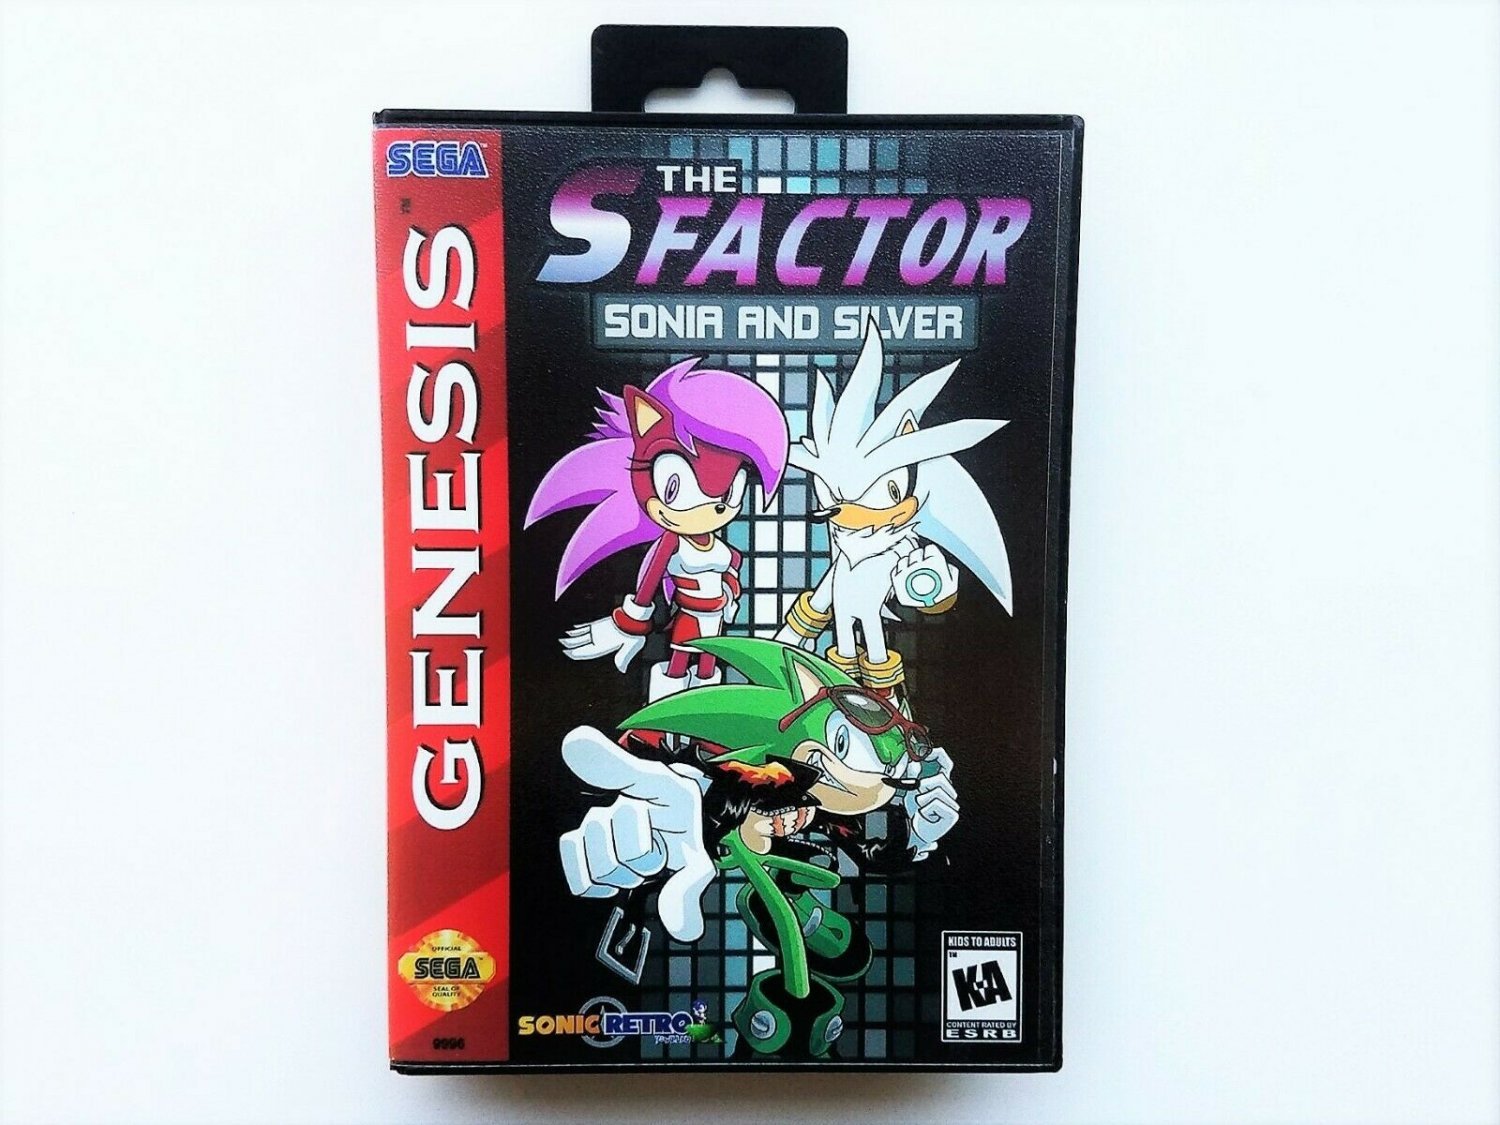 S Factor Sonia and Silver - Custom Case / Game Sega Genesis